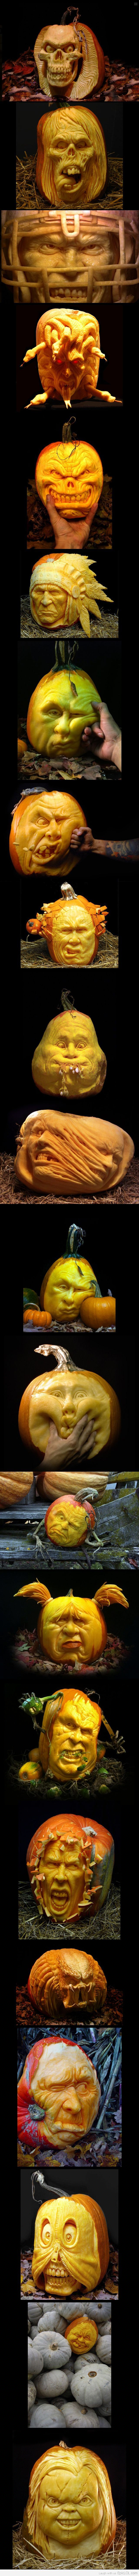 Coolest pumpkin carvings EVER